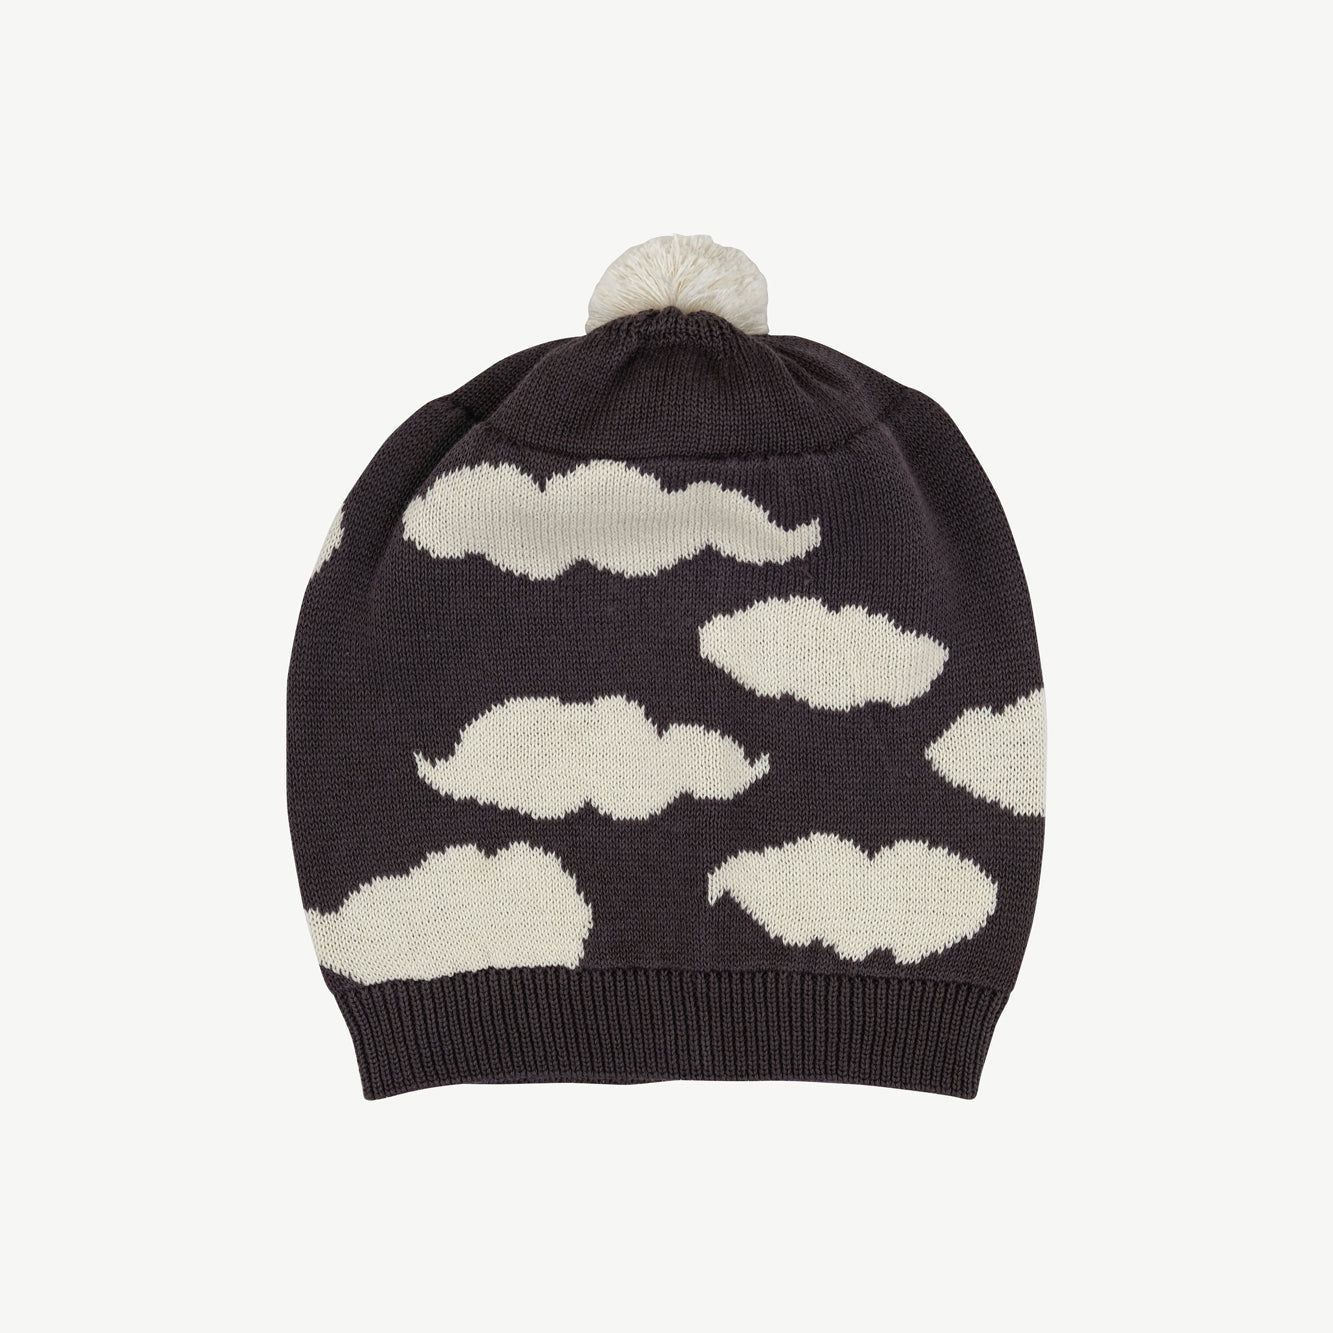 'clouds' beluga knit clouds baby beanie